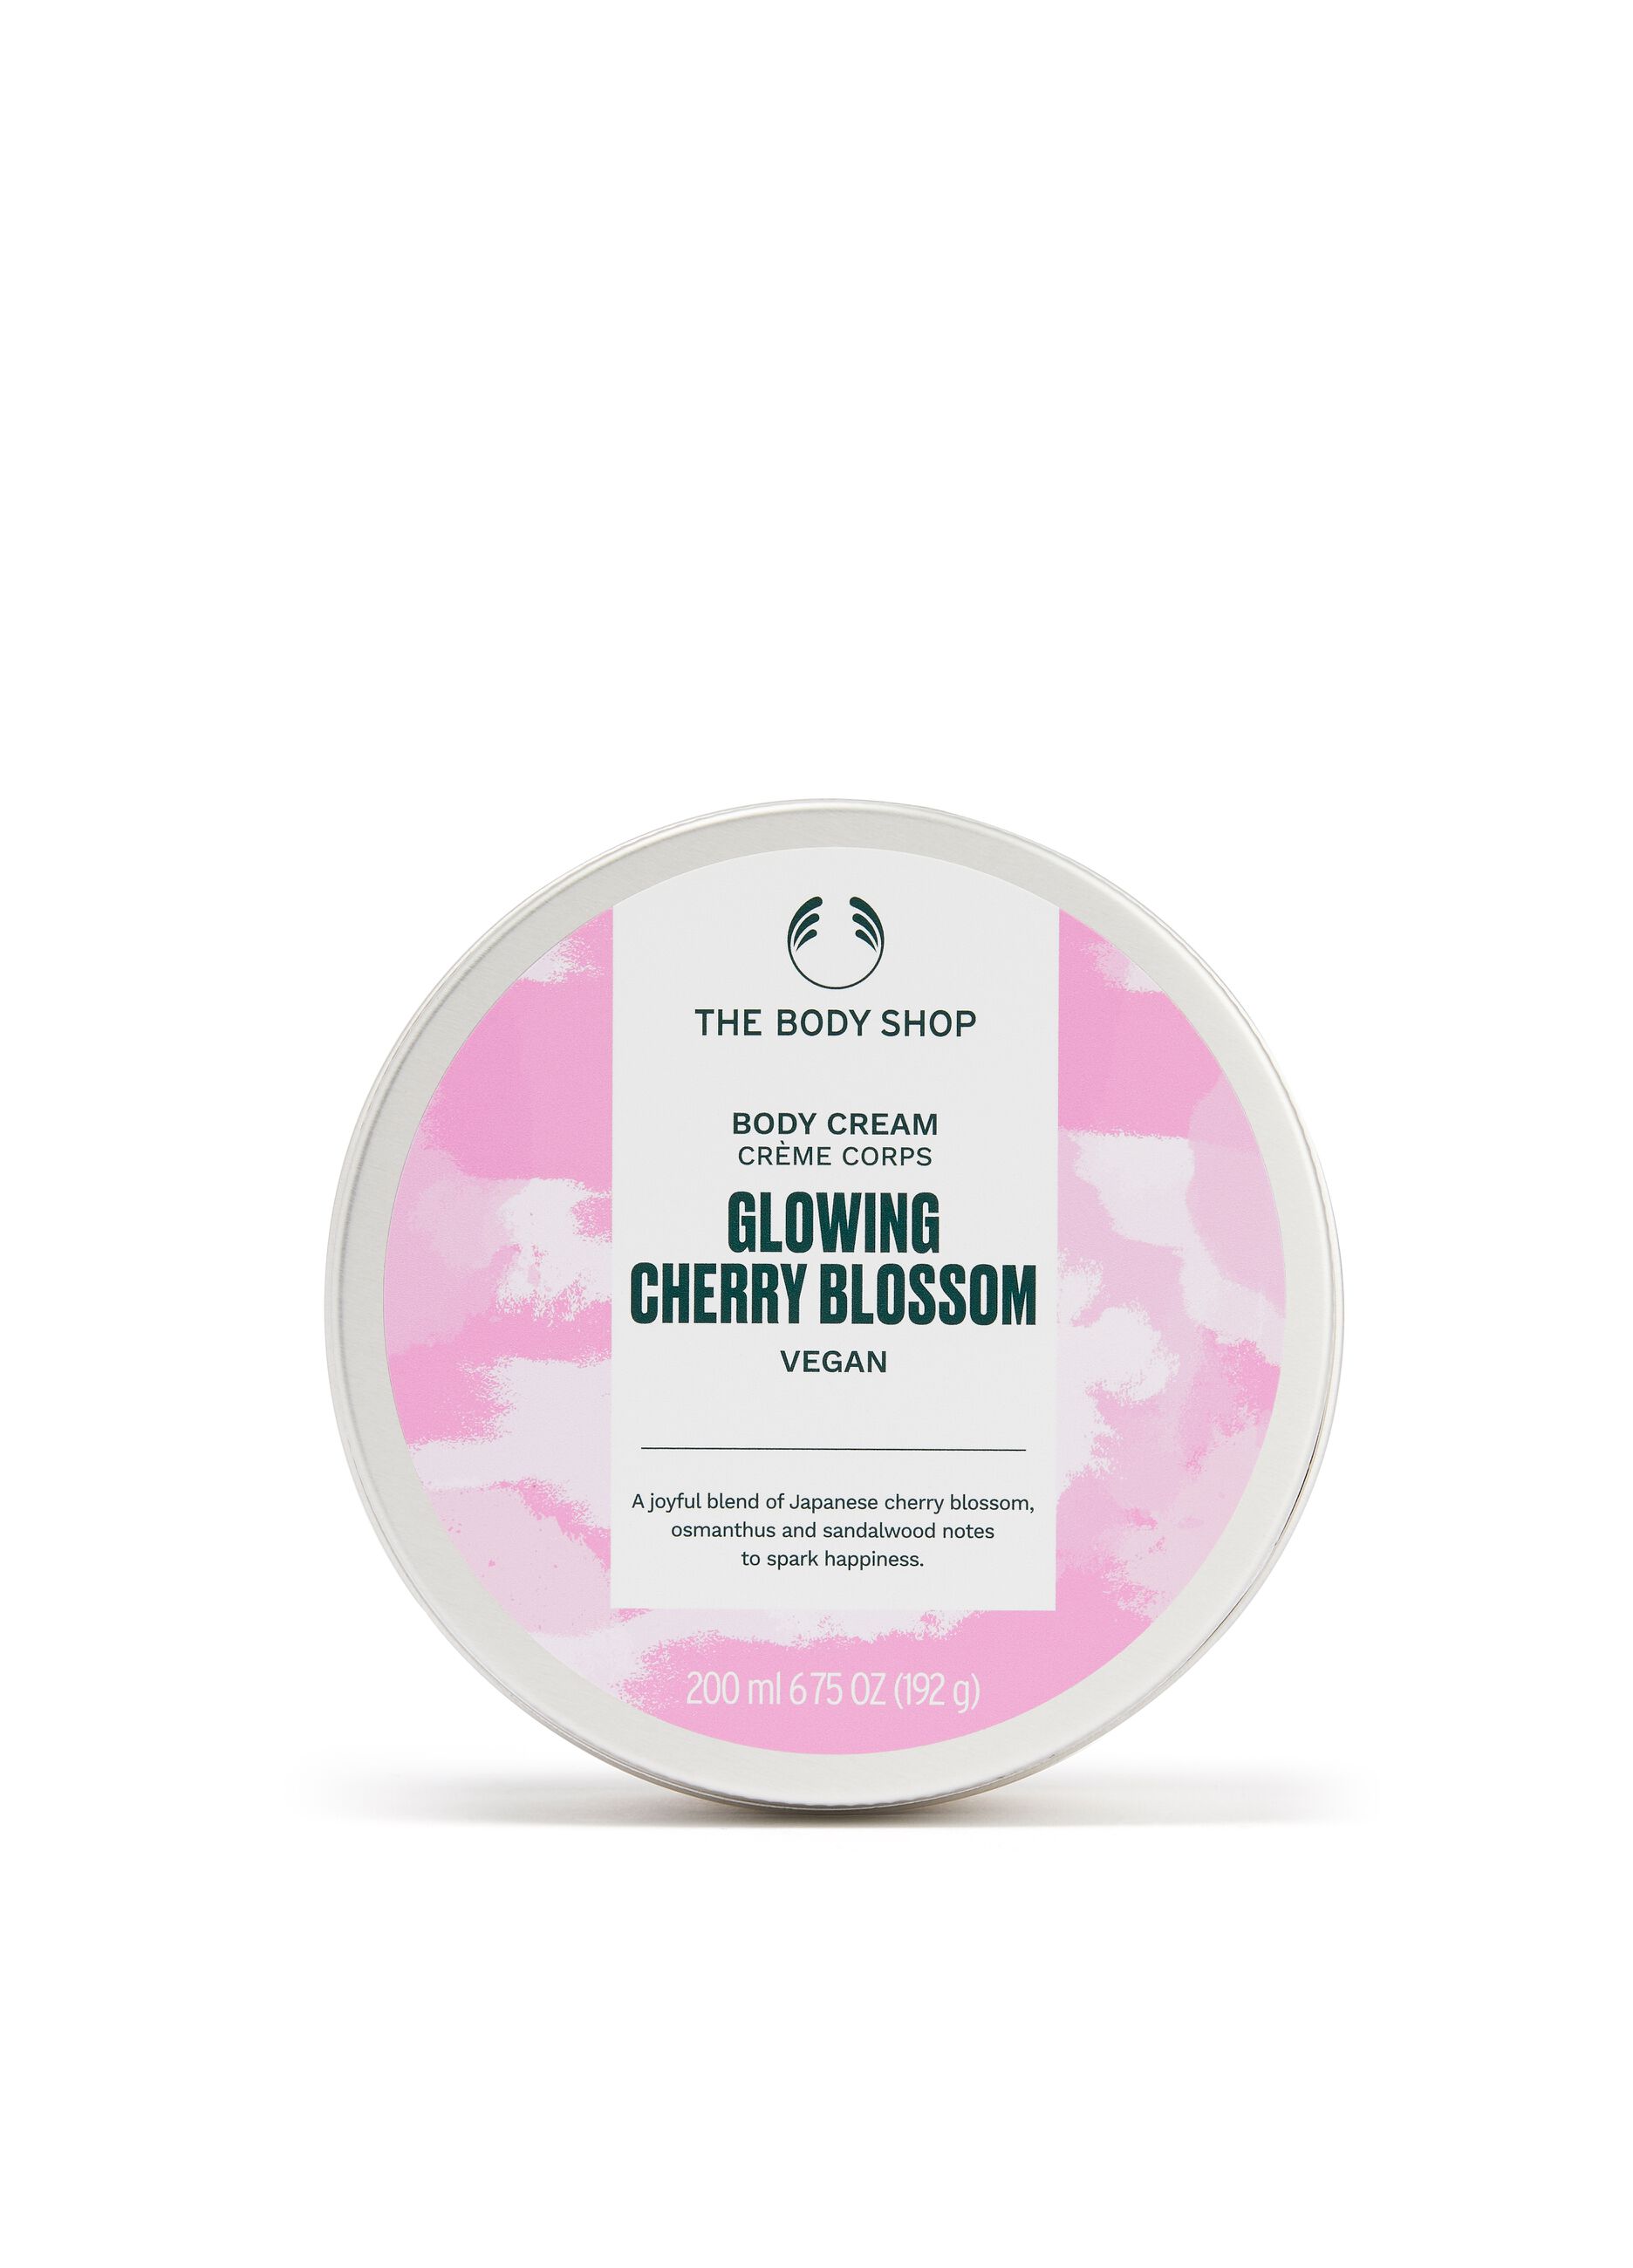 The Body Shop Glowing Cherry Blossom cream 200ml